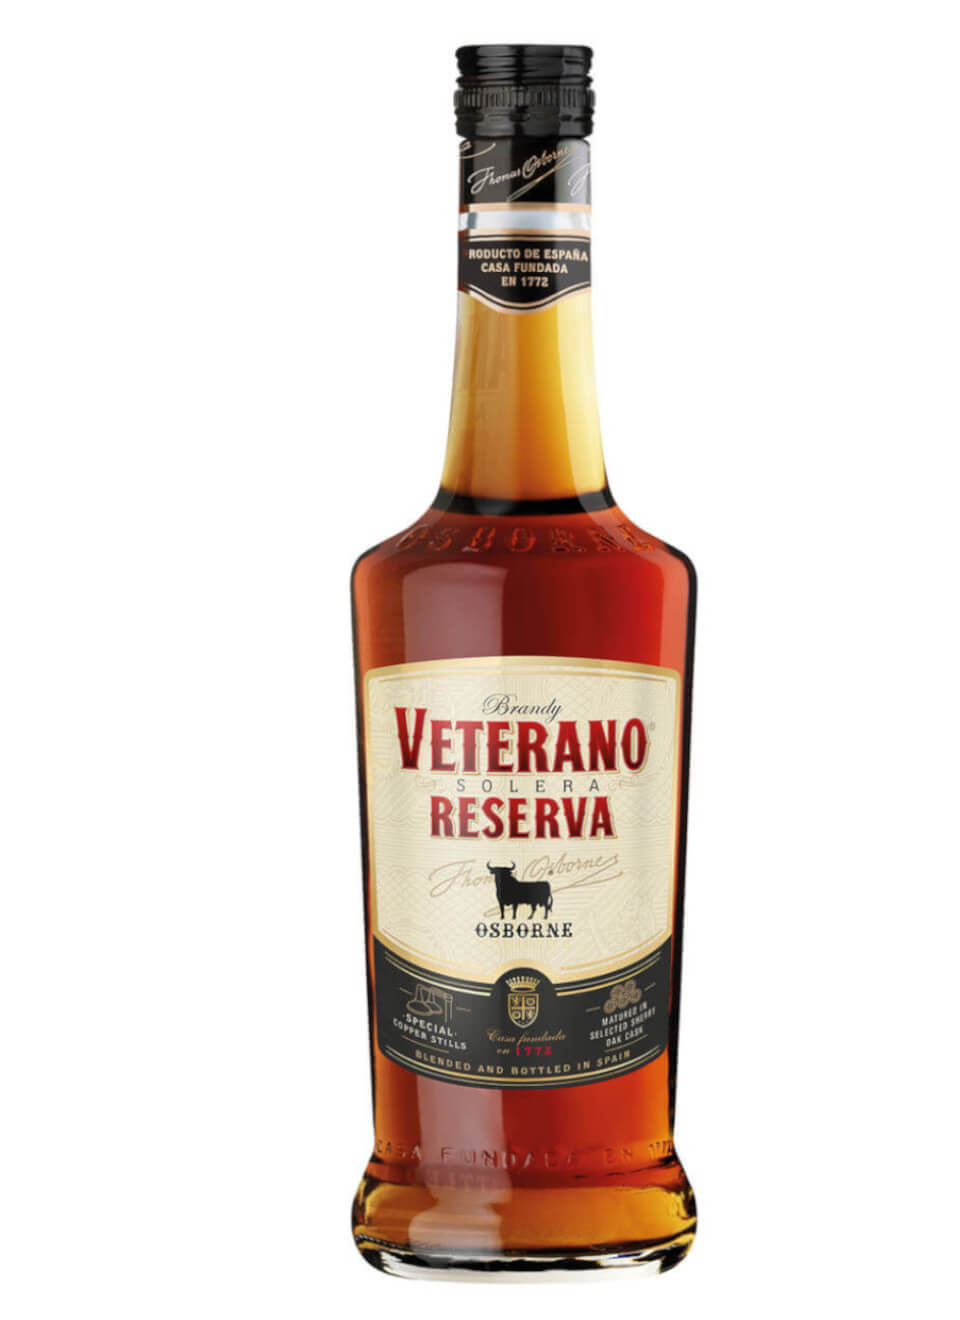  Osborne Veterano Solera Reserva Brandy Flasche 1 x 0,7 l